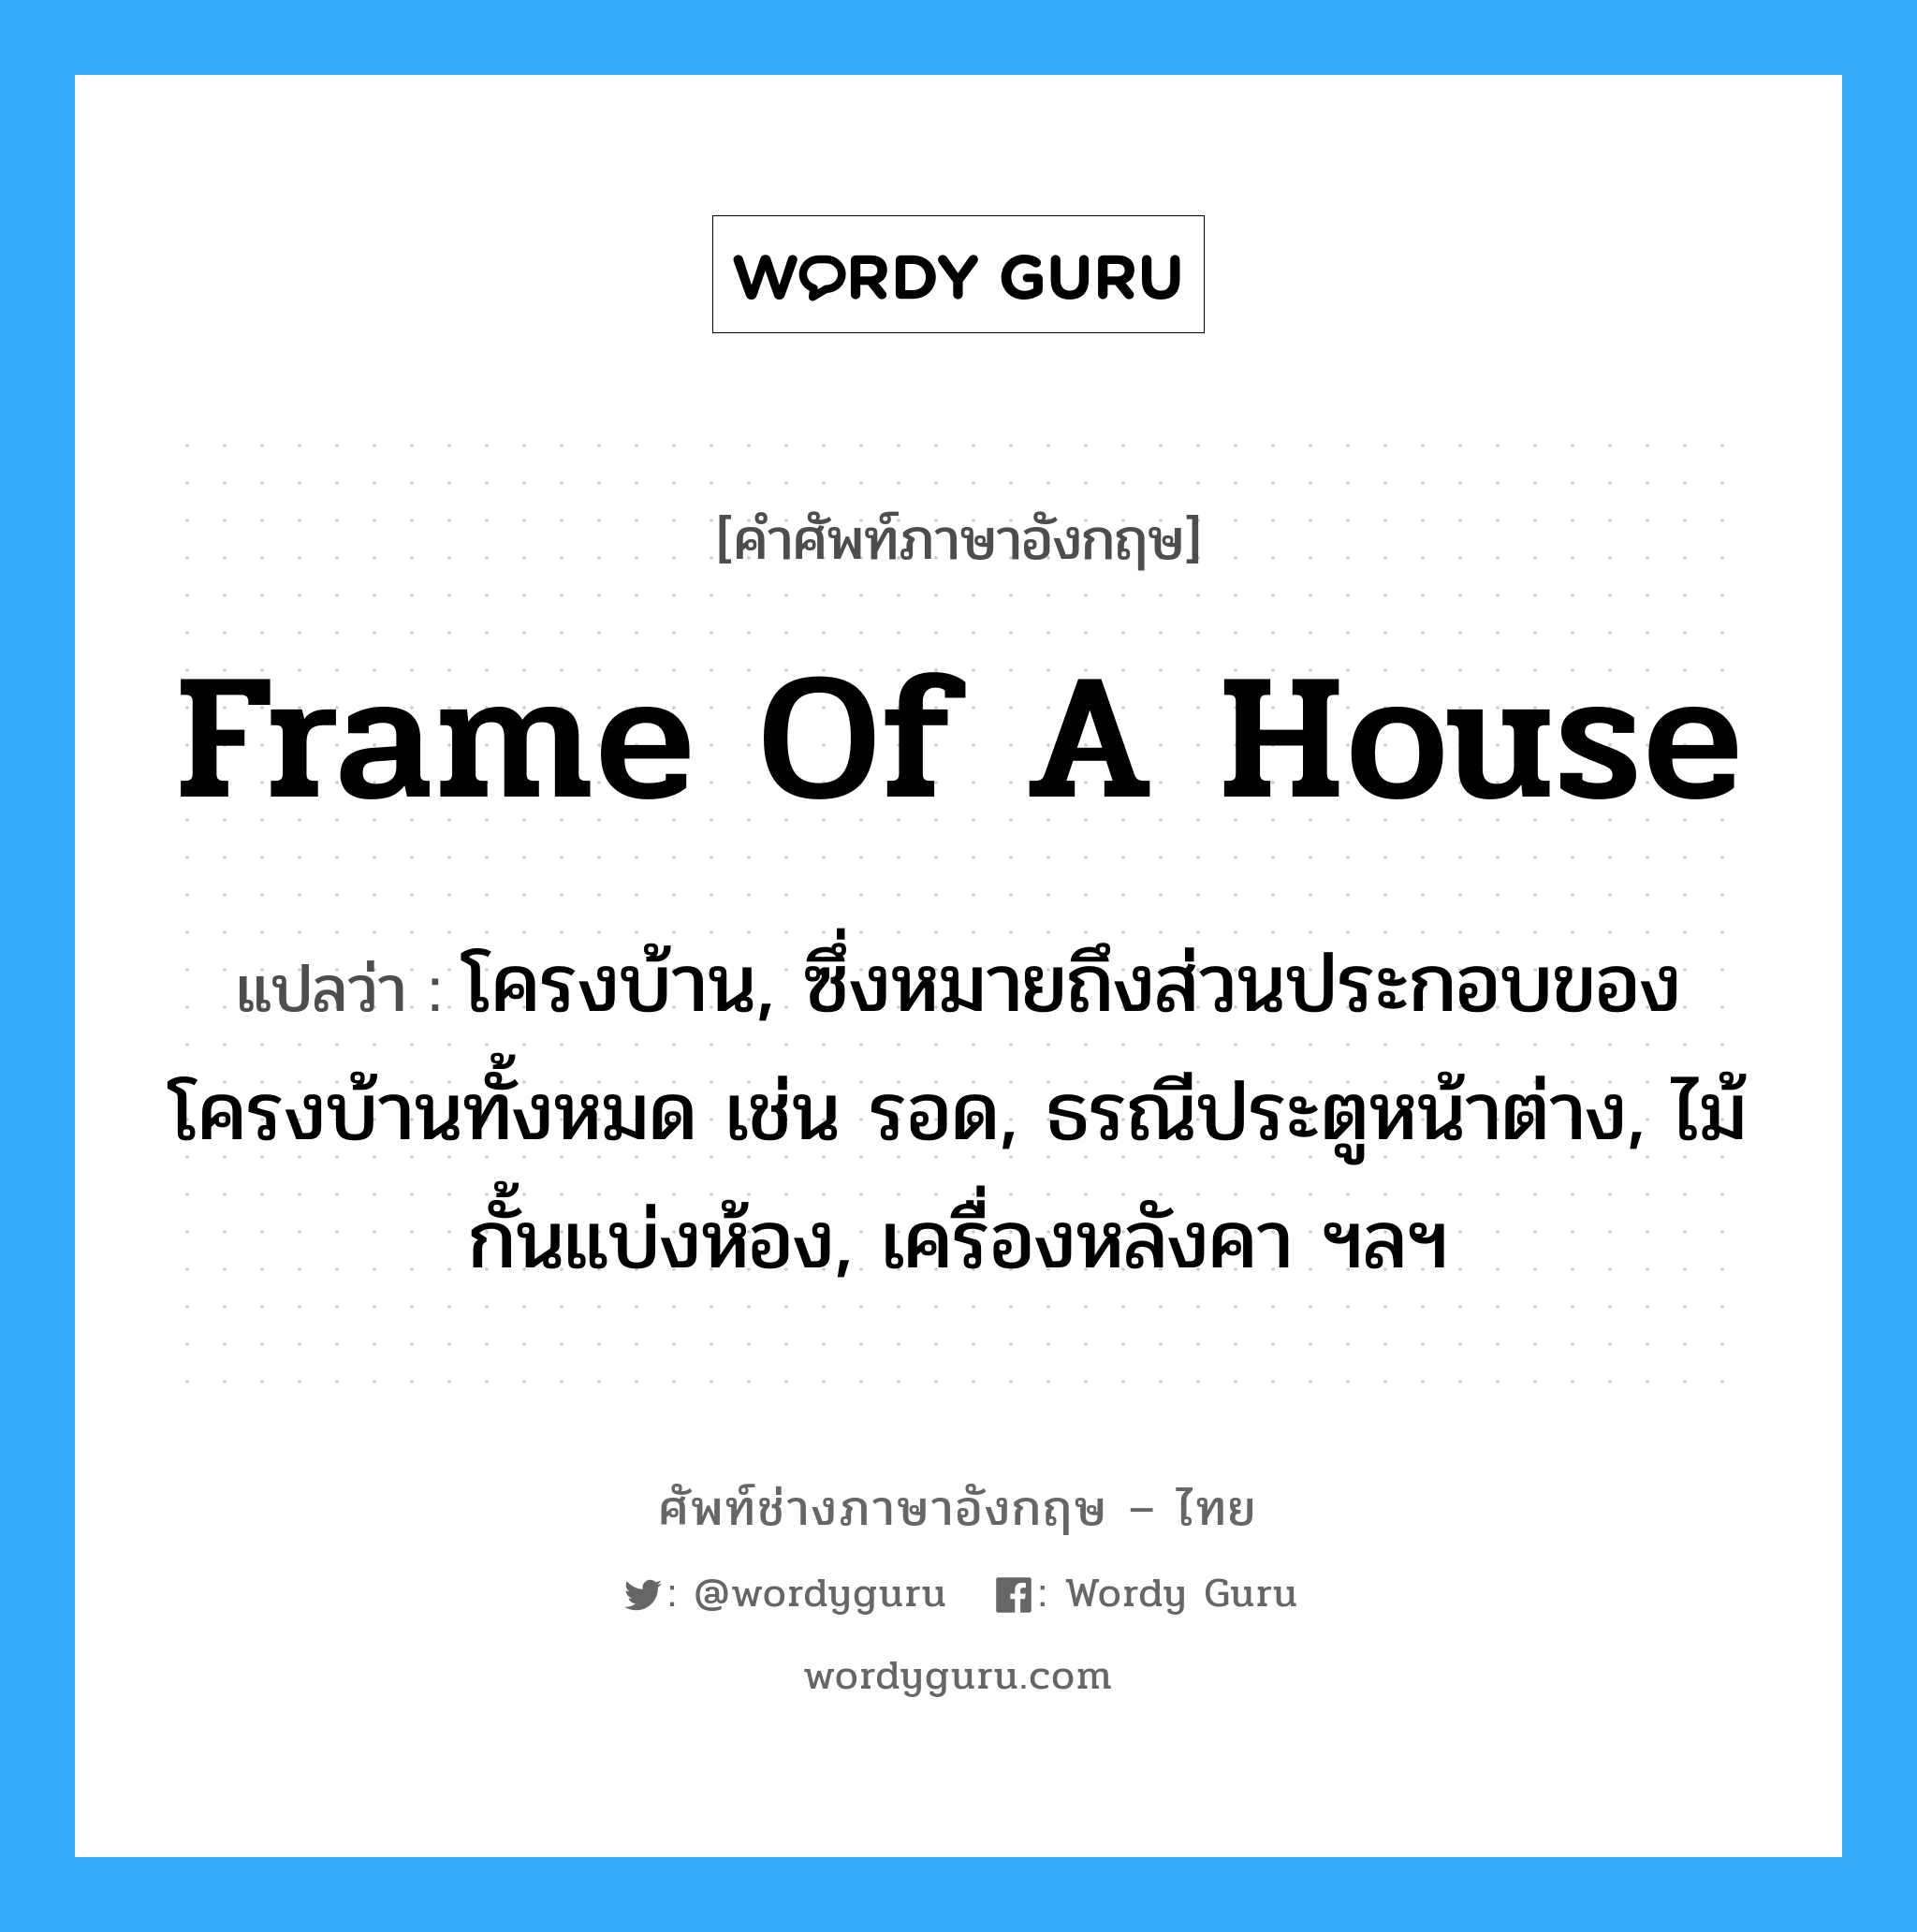 frame of a house แปลว่า?, คำศัพท์ช่างภาษาอังกฤษ - ไทย frame of a house คำศัพท์ภาษาอังกฤษ frame of a house แปลว่า โครงบ้าน, ซึ่งหมายถึงส่วนประกอบของโครงบ้านทั้งหมด เช่น รอด, ธรณีประตูหน้าต่าง, ไม้กั้นแบ่งห้อง, เครื่องหลังคา ฯลฯ